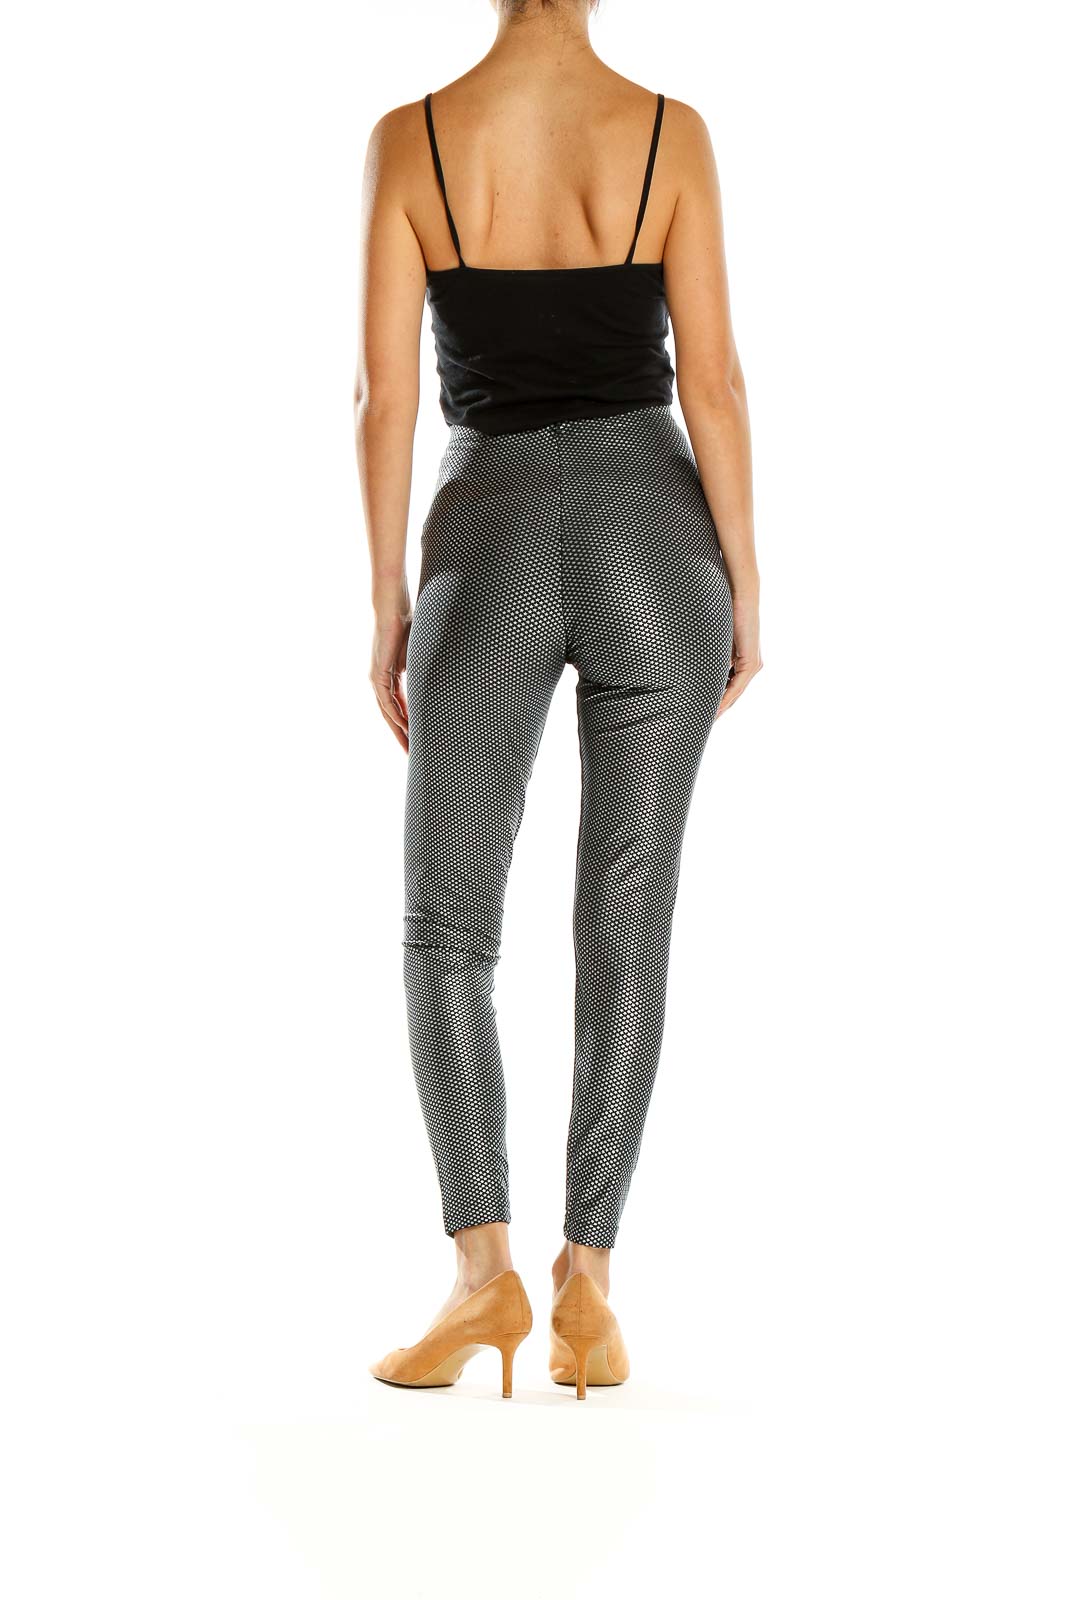 American Apparel shiny black Nylon Spandex leggings | Nylon spandex leggings,  American apparel, Black nylons